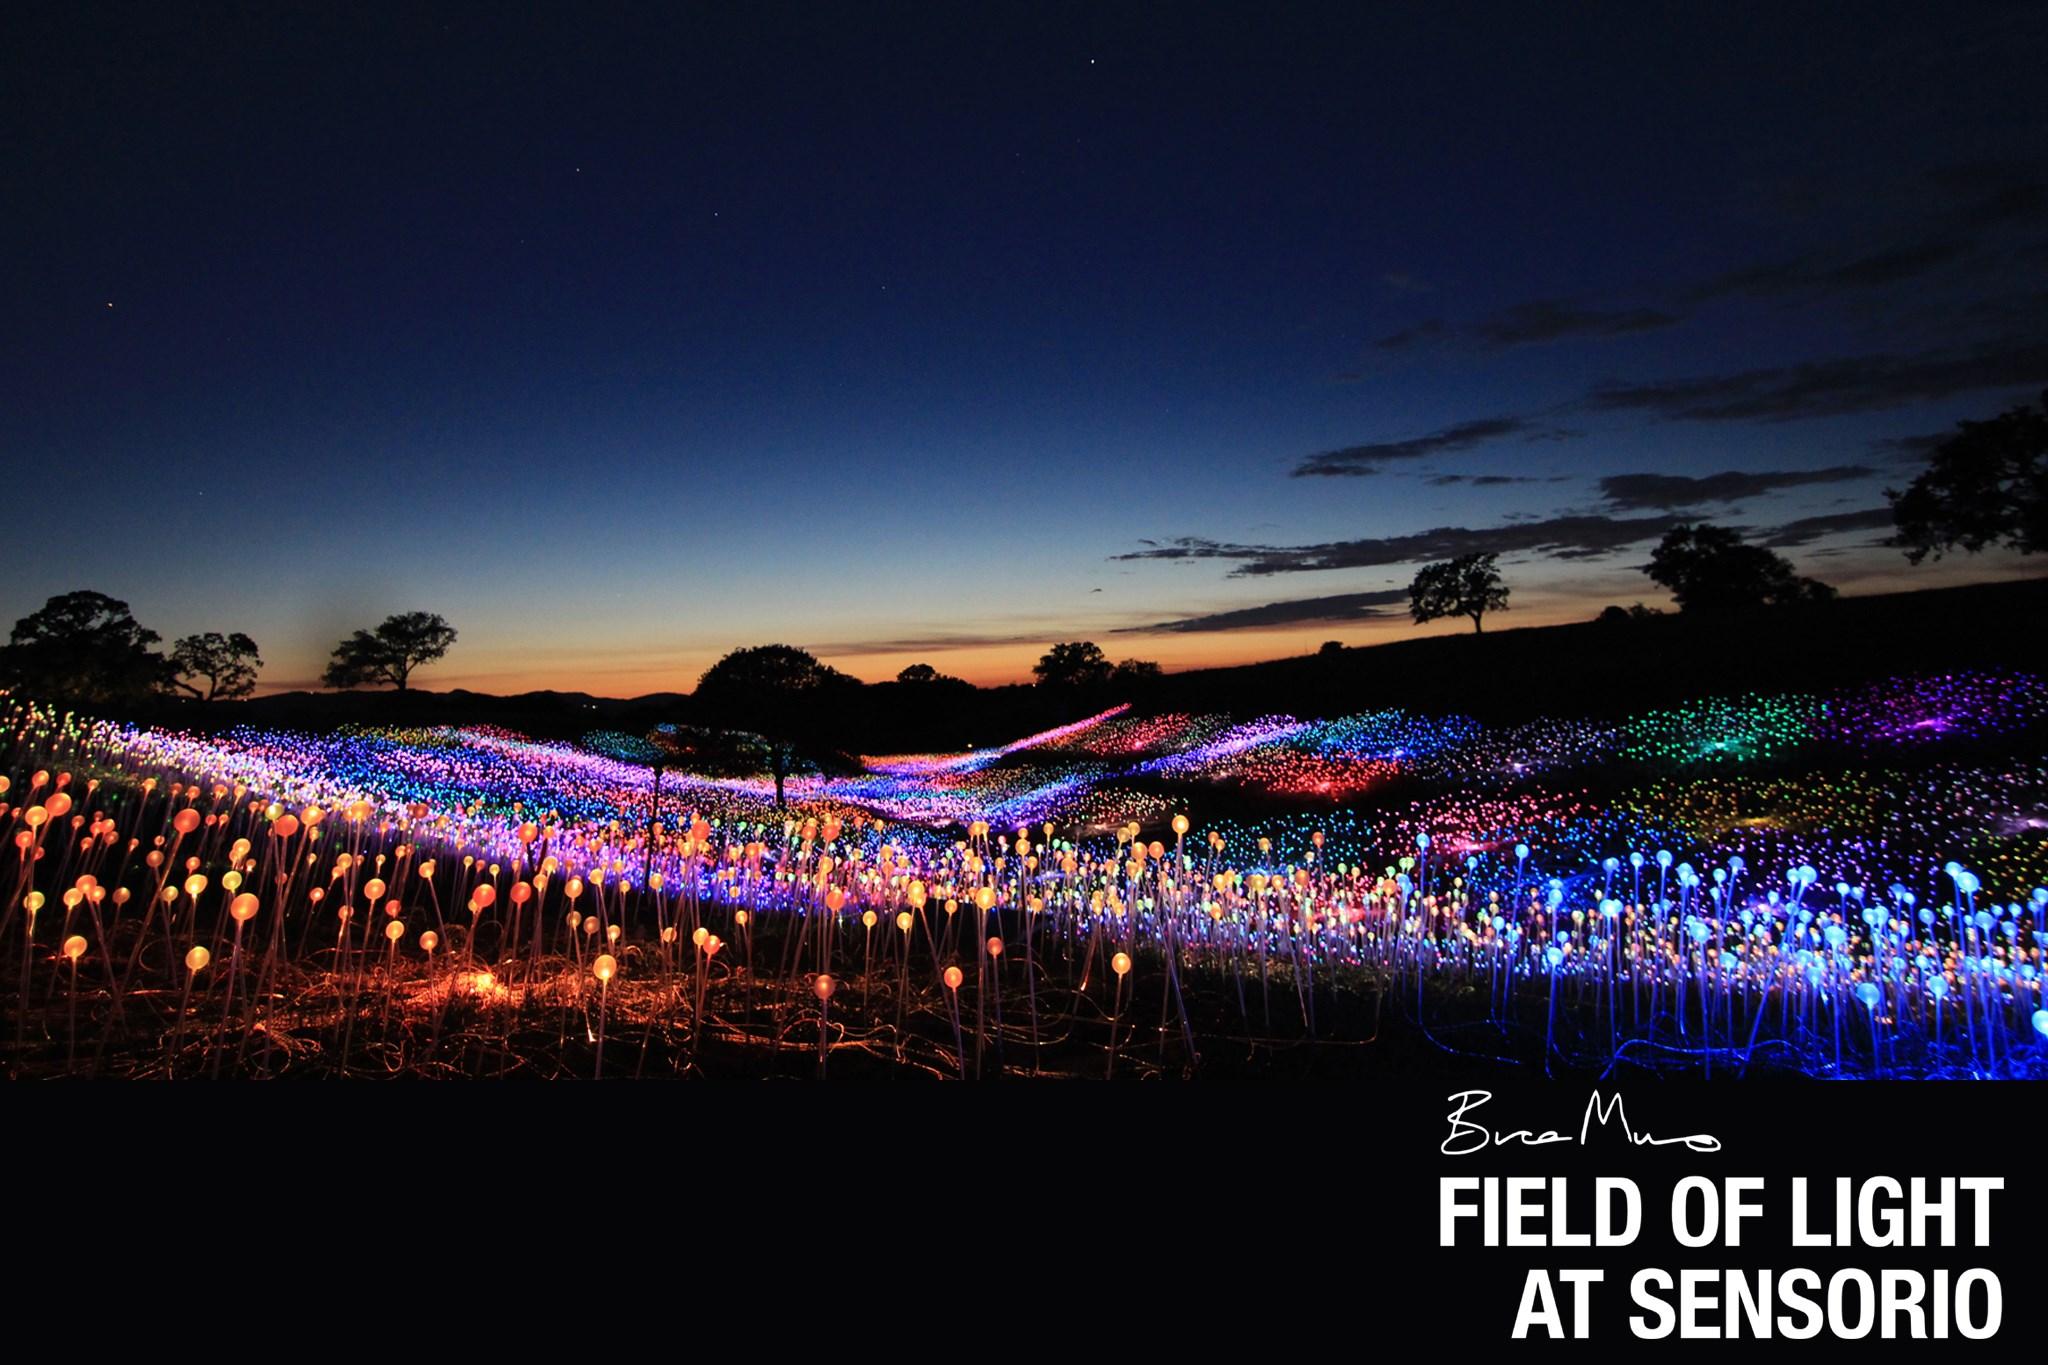 Bruce Munro: Field of Light at Sensorio, Thursday FAMILY NIGHT July 2nd